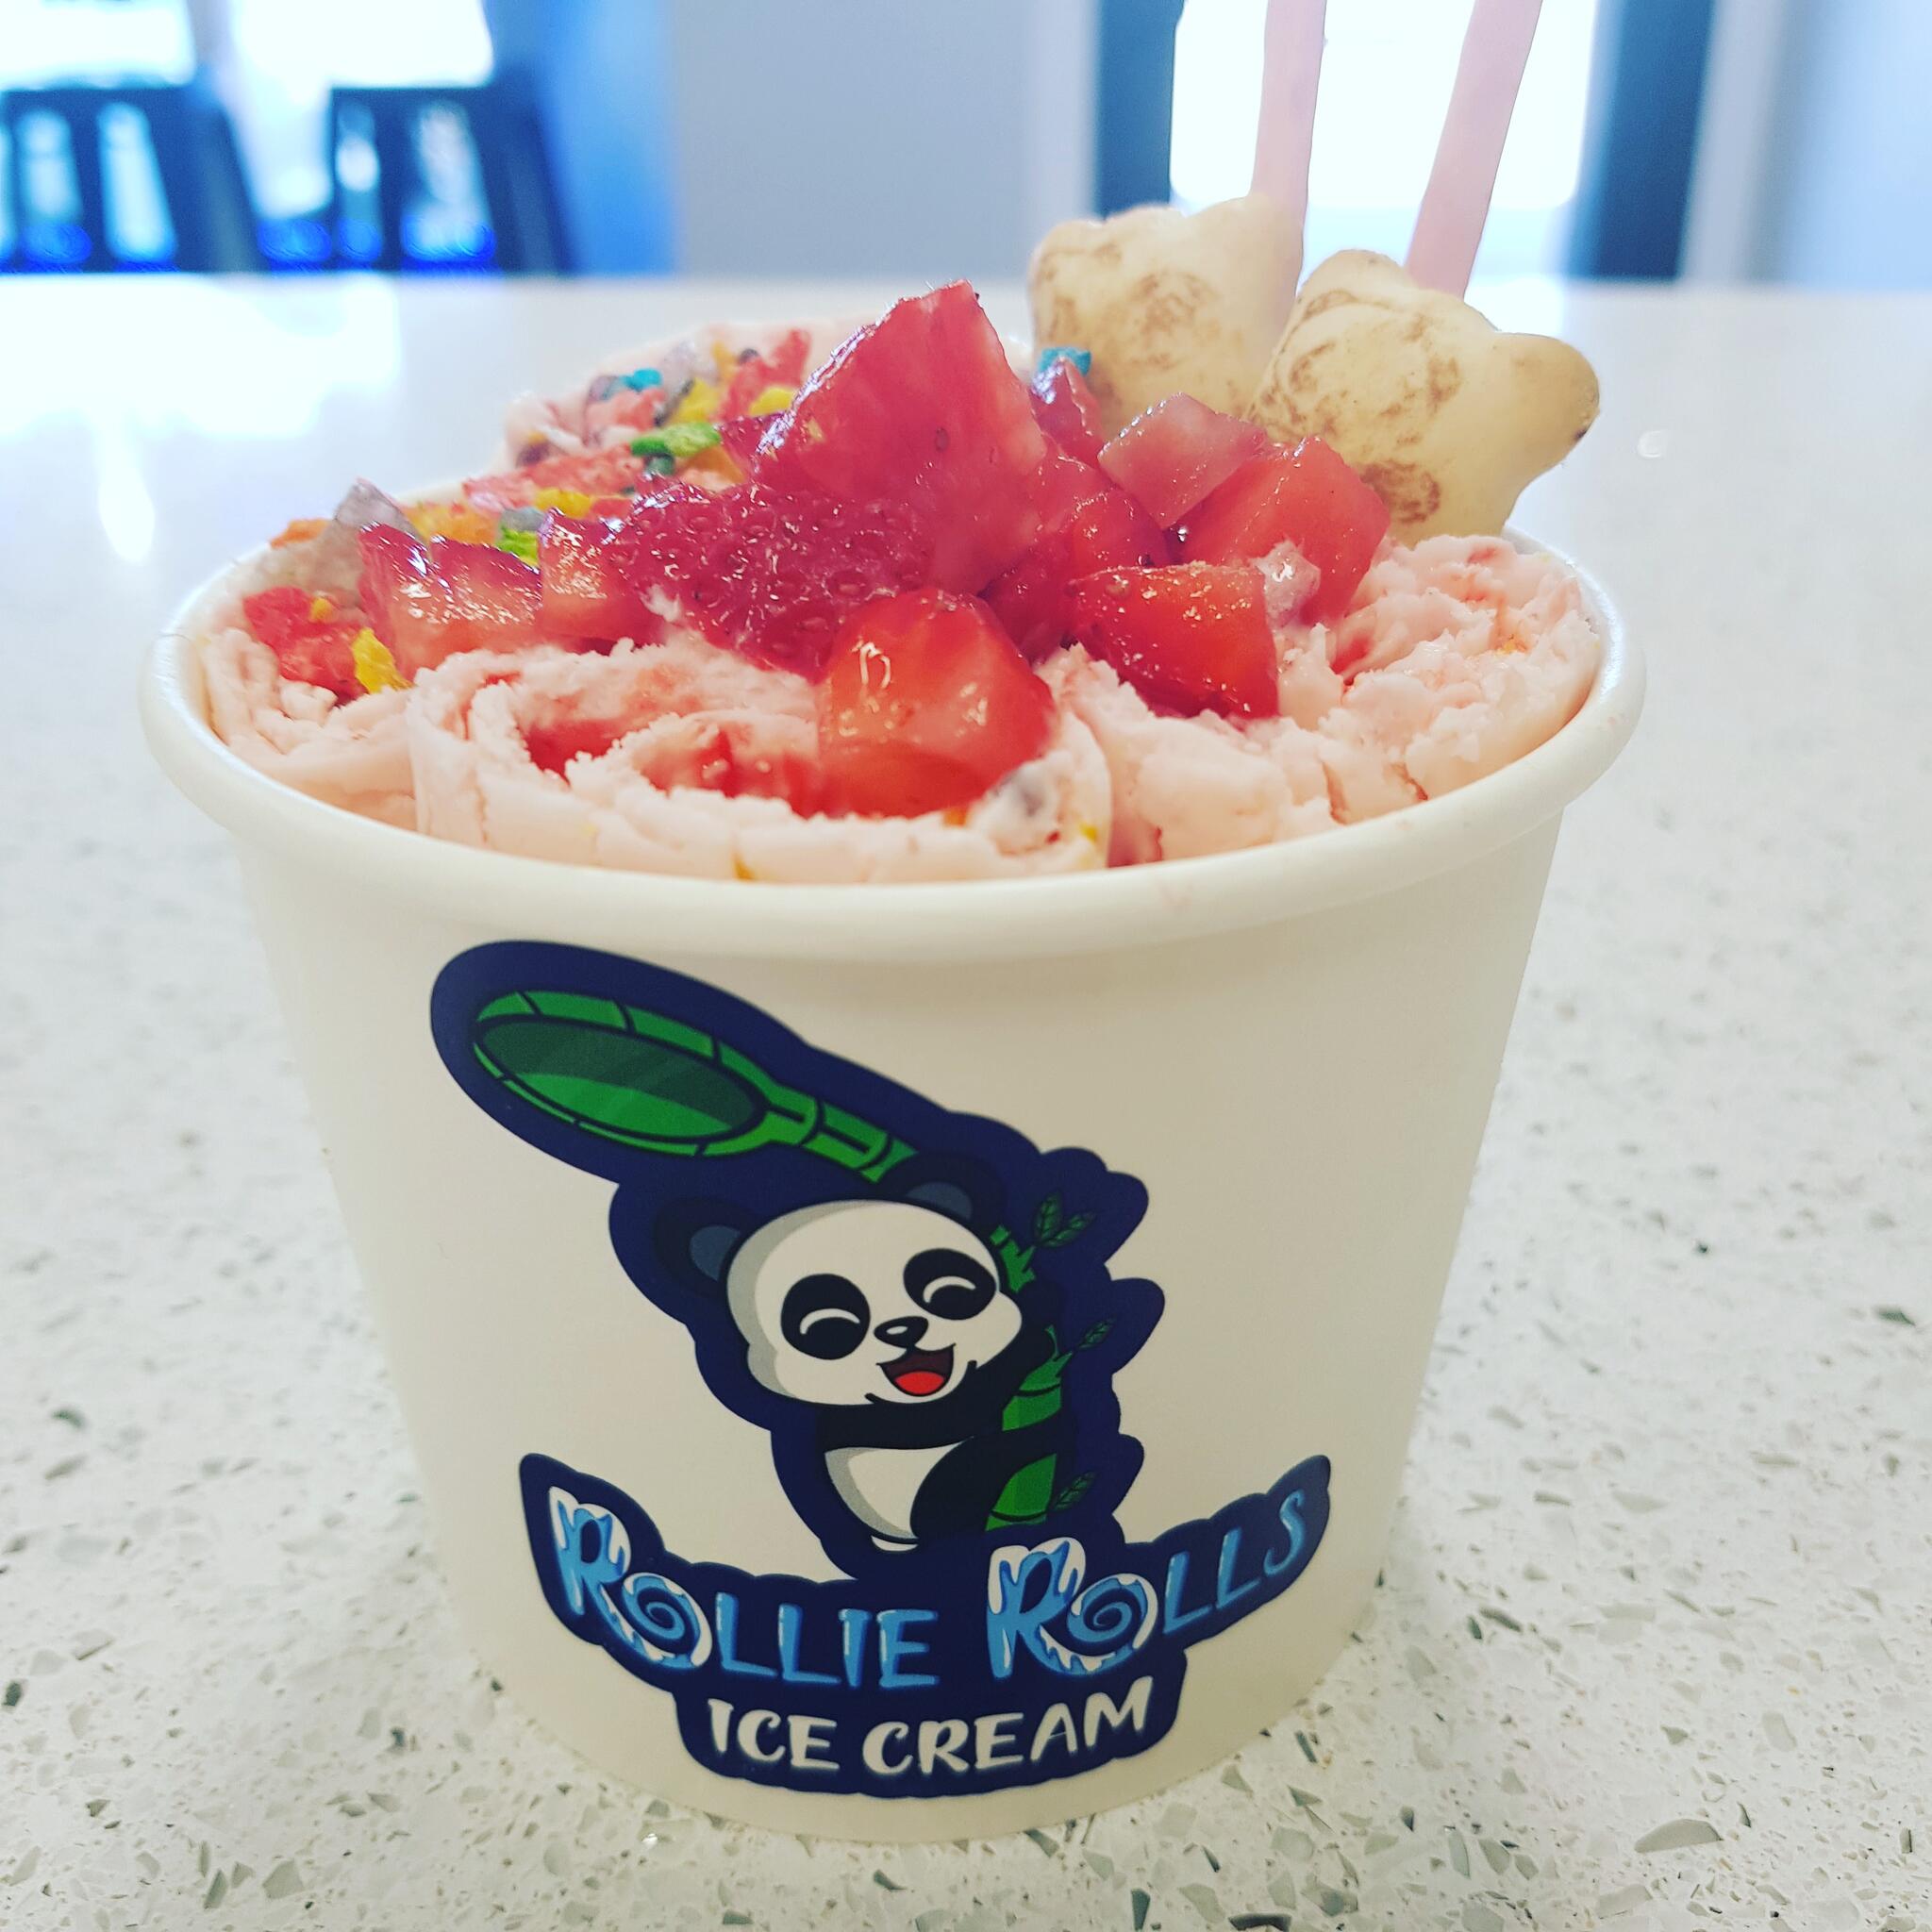 Rollie Rolls Ice Cream